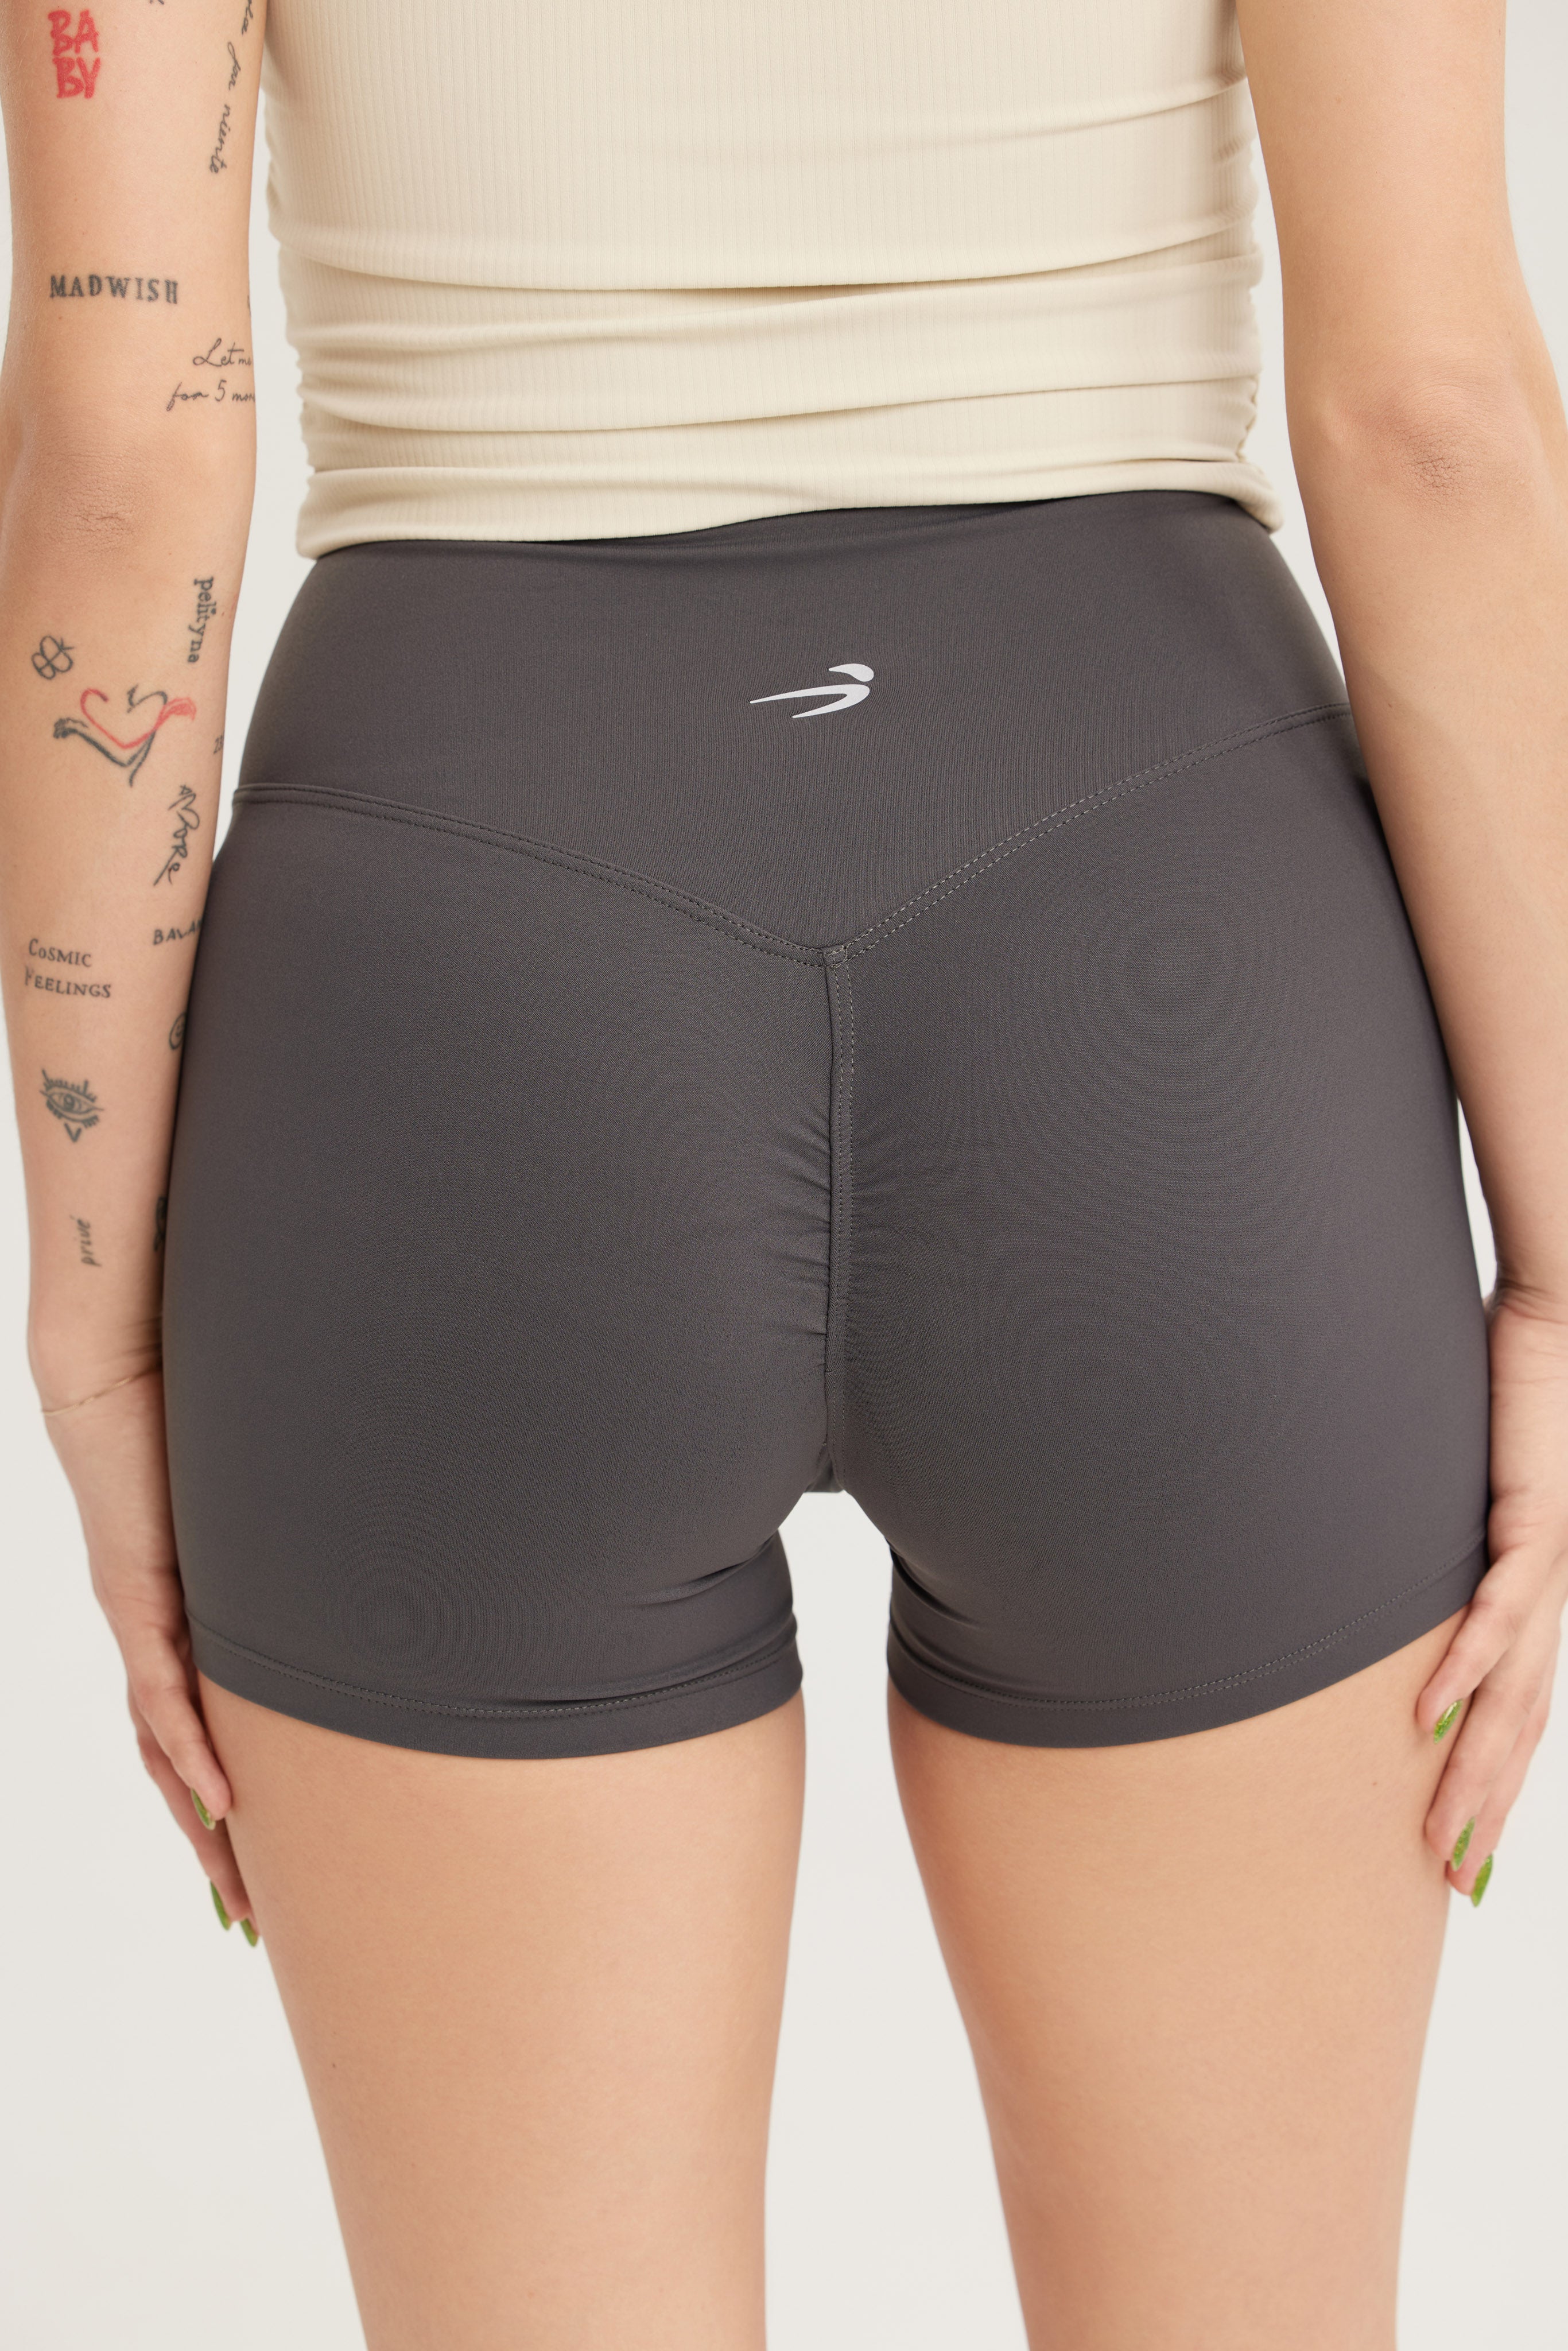 EKJ Charcoal Grey Seamless High-Waist Butt Lifting Shorts My Store